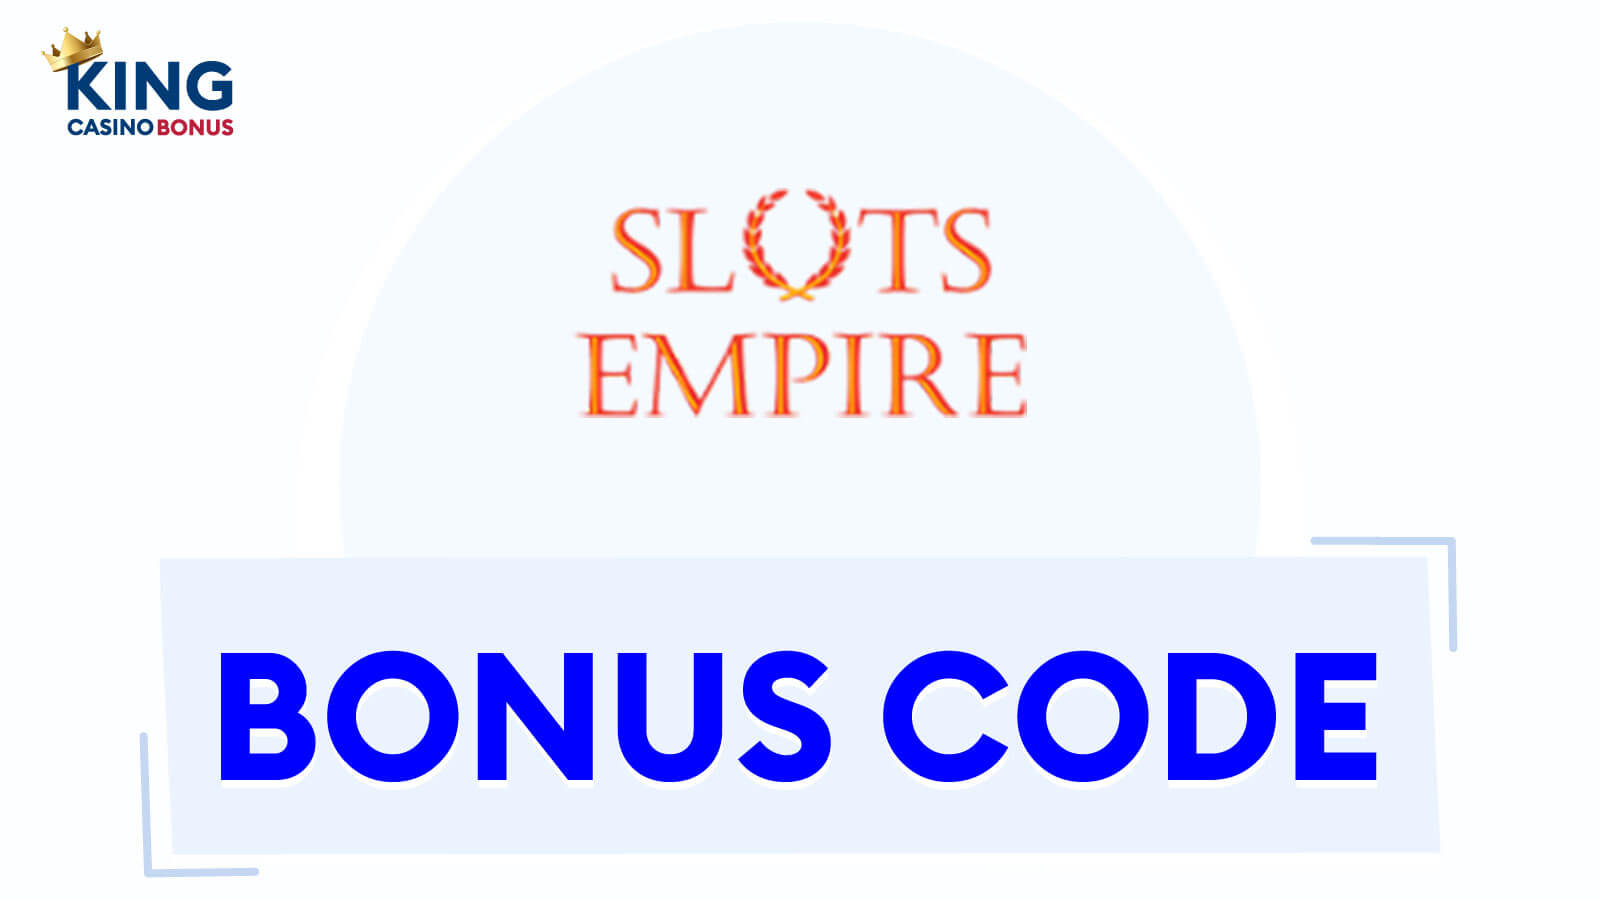 Slots Empire Casino Bonuses